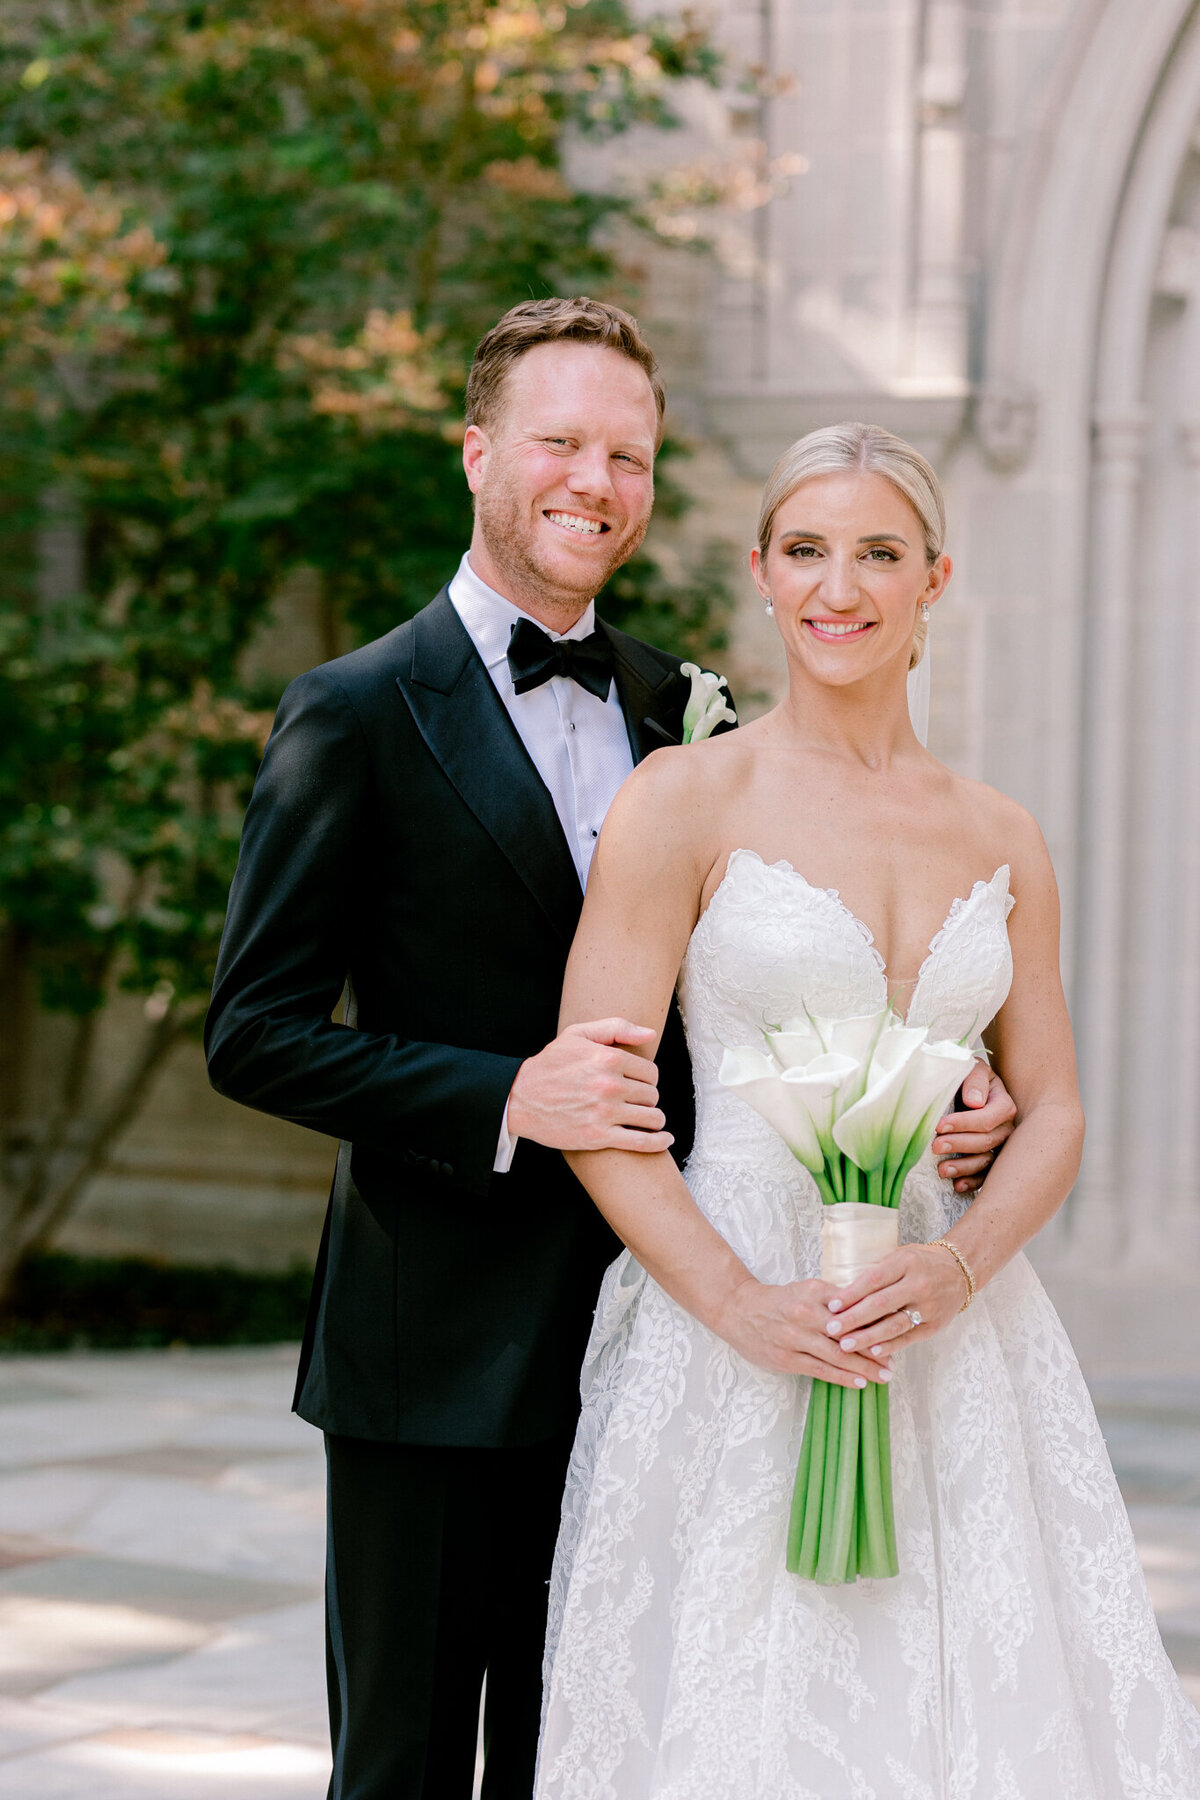 Katelyn & Kyle's Wedding at the Adolphus Hotel | Dallas Wedding Photographer | Sami Kathryn Photography-193